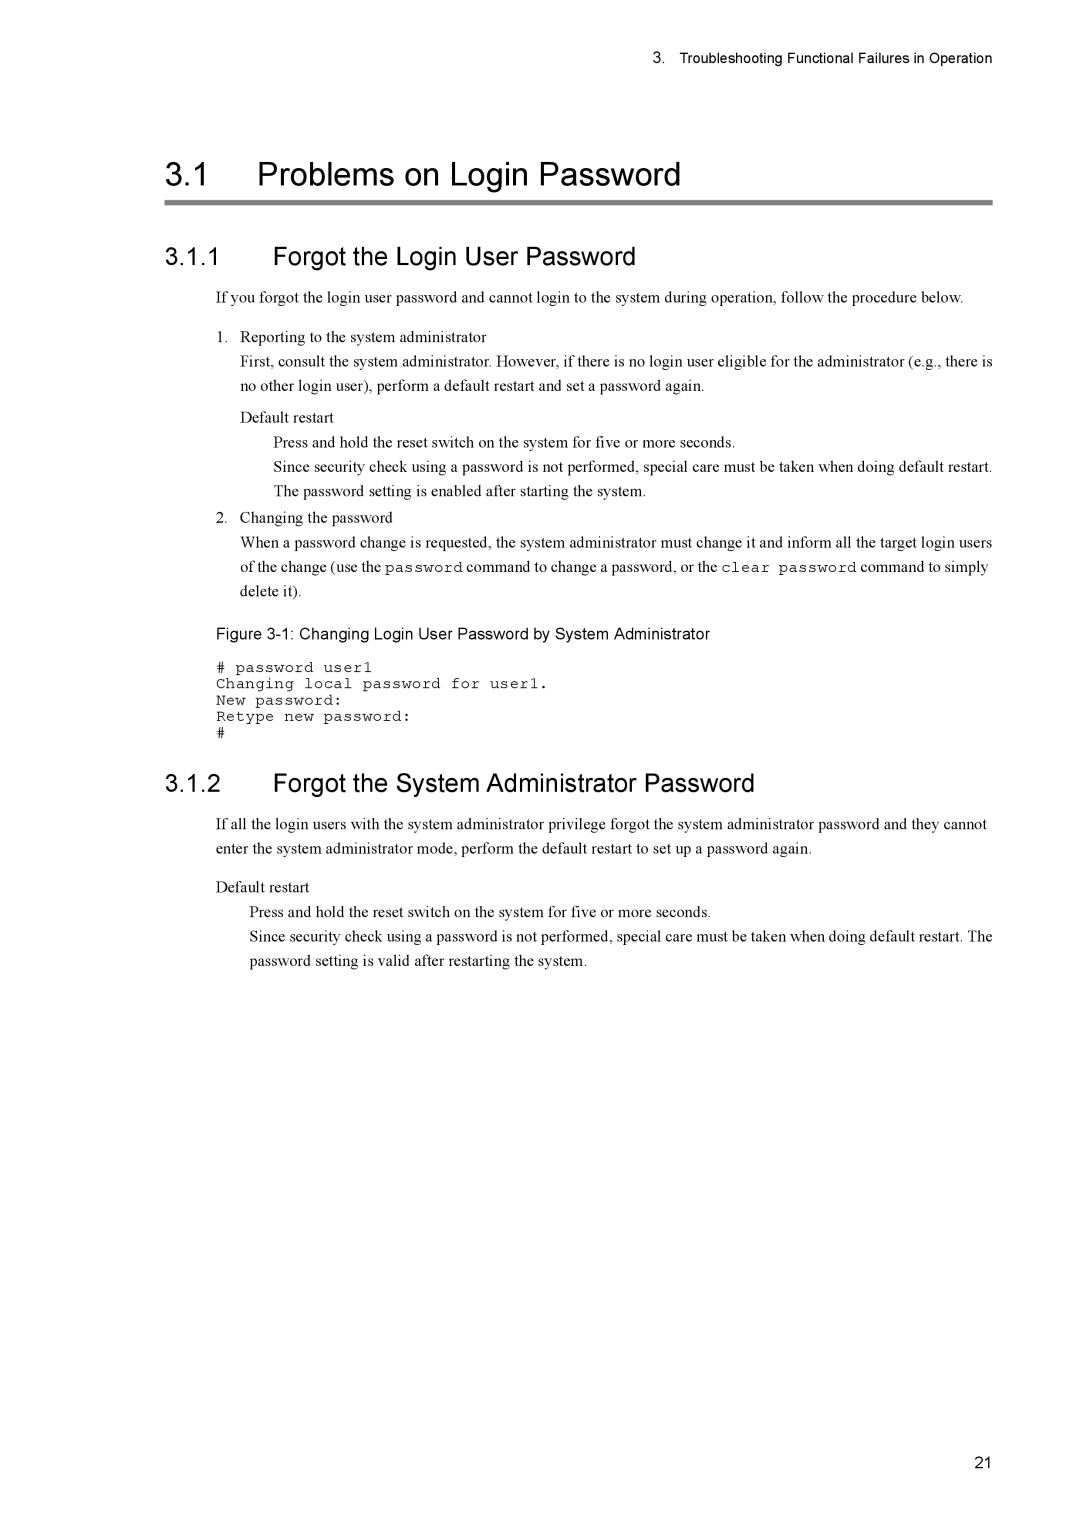 NEC IP8800/S6700 Problems on Login Password, Forgot the Login User Password, Forgot the System Administrator Password 